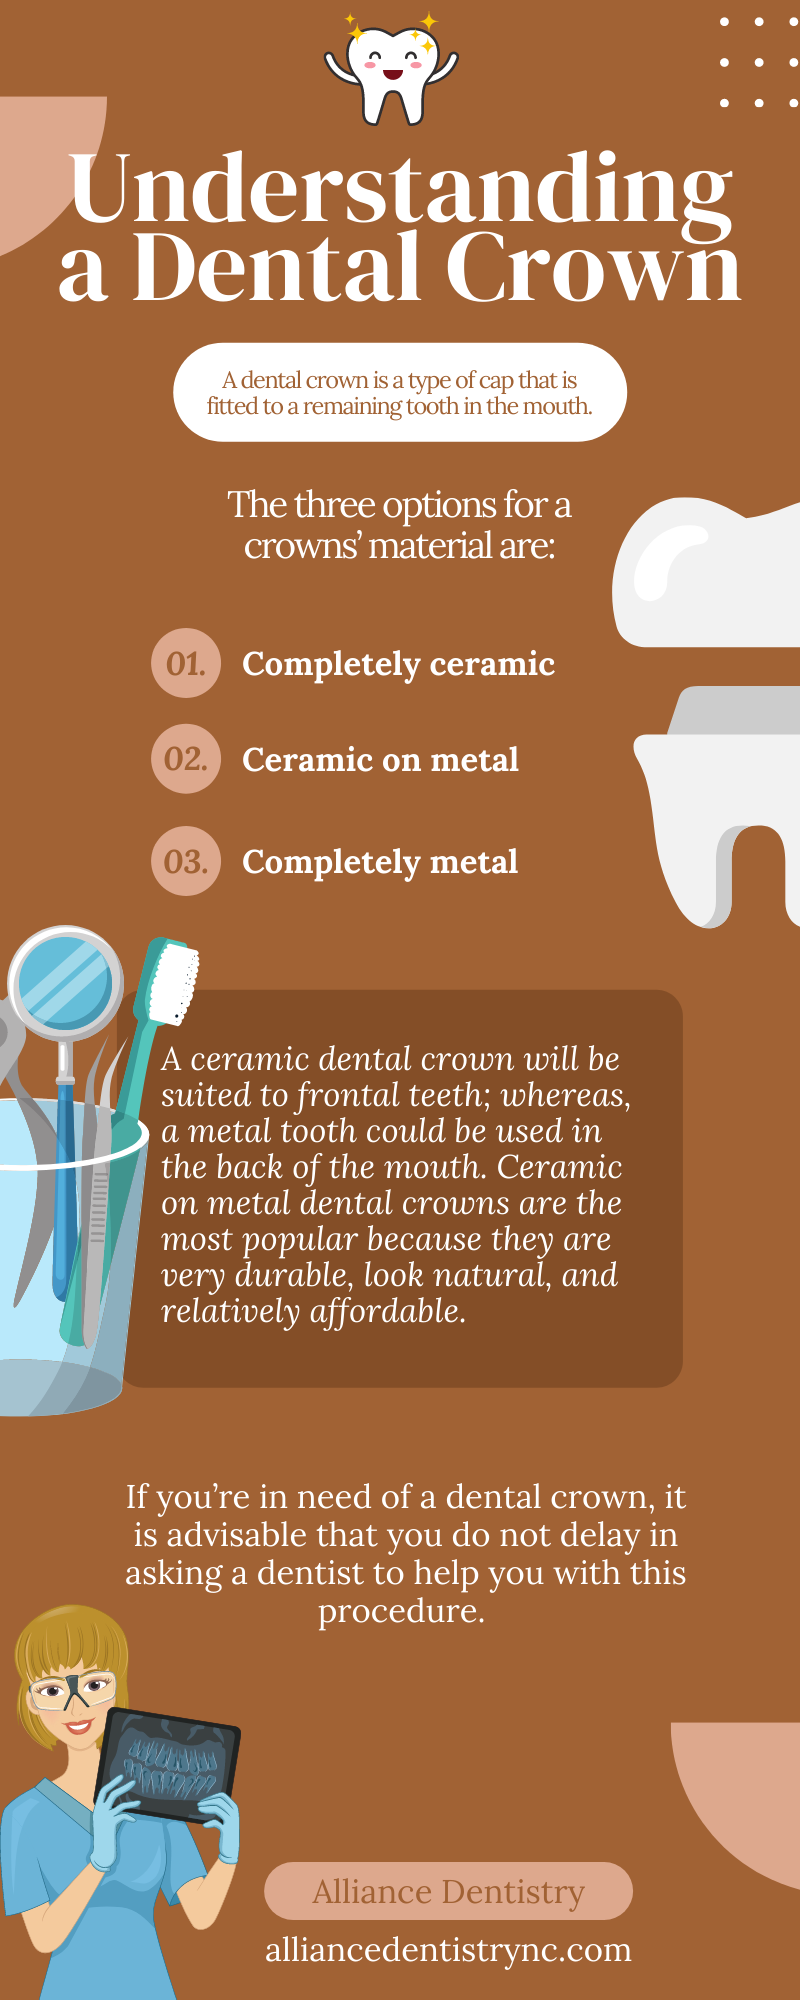 Understanding a Dental Crown Infographic